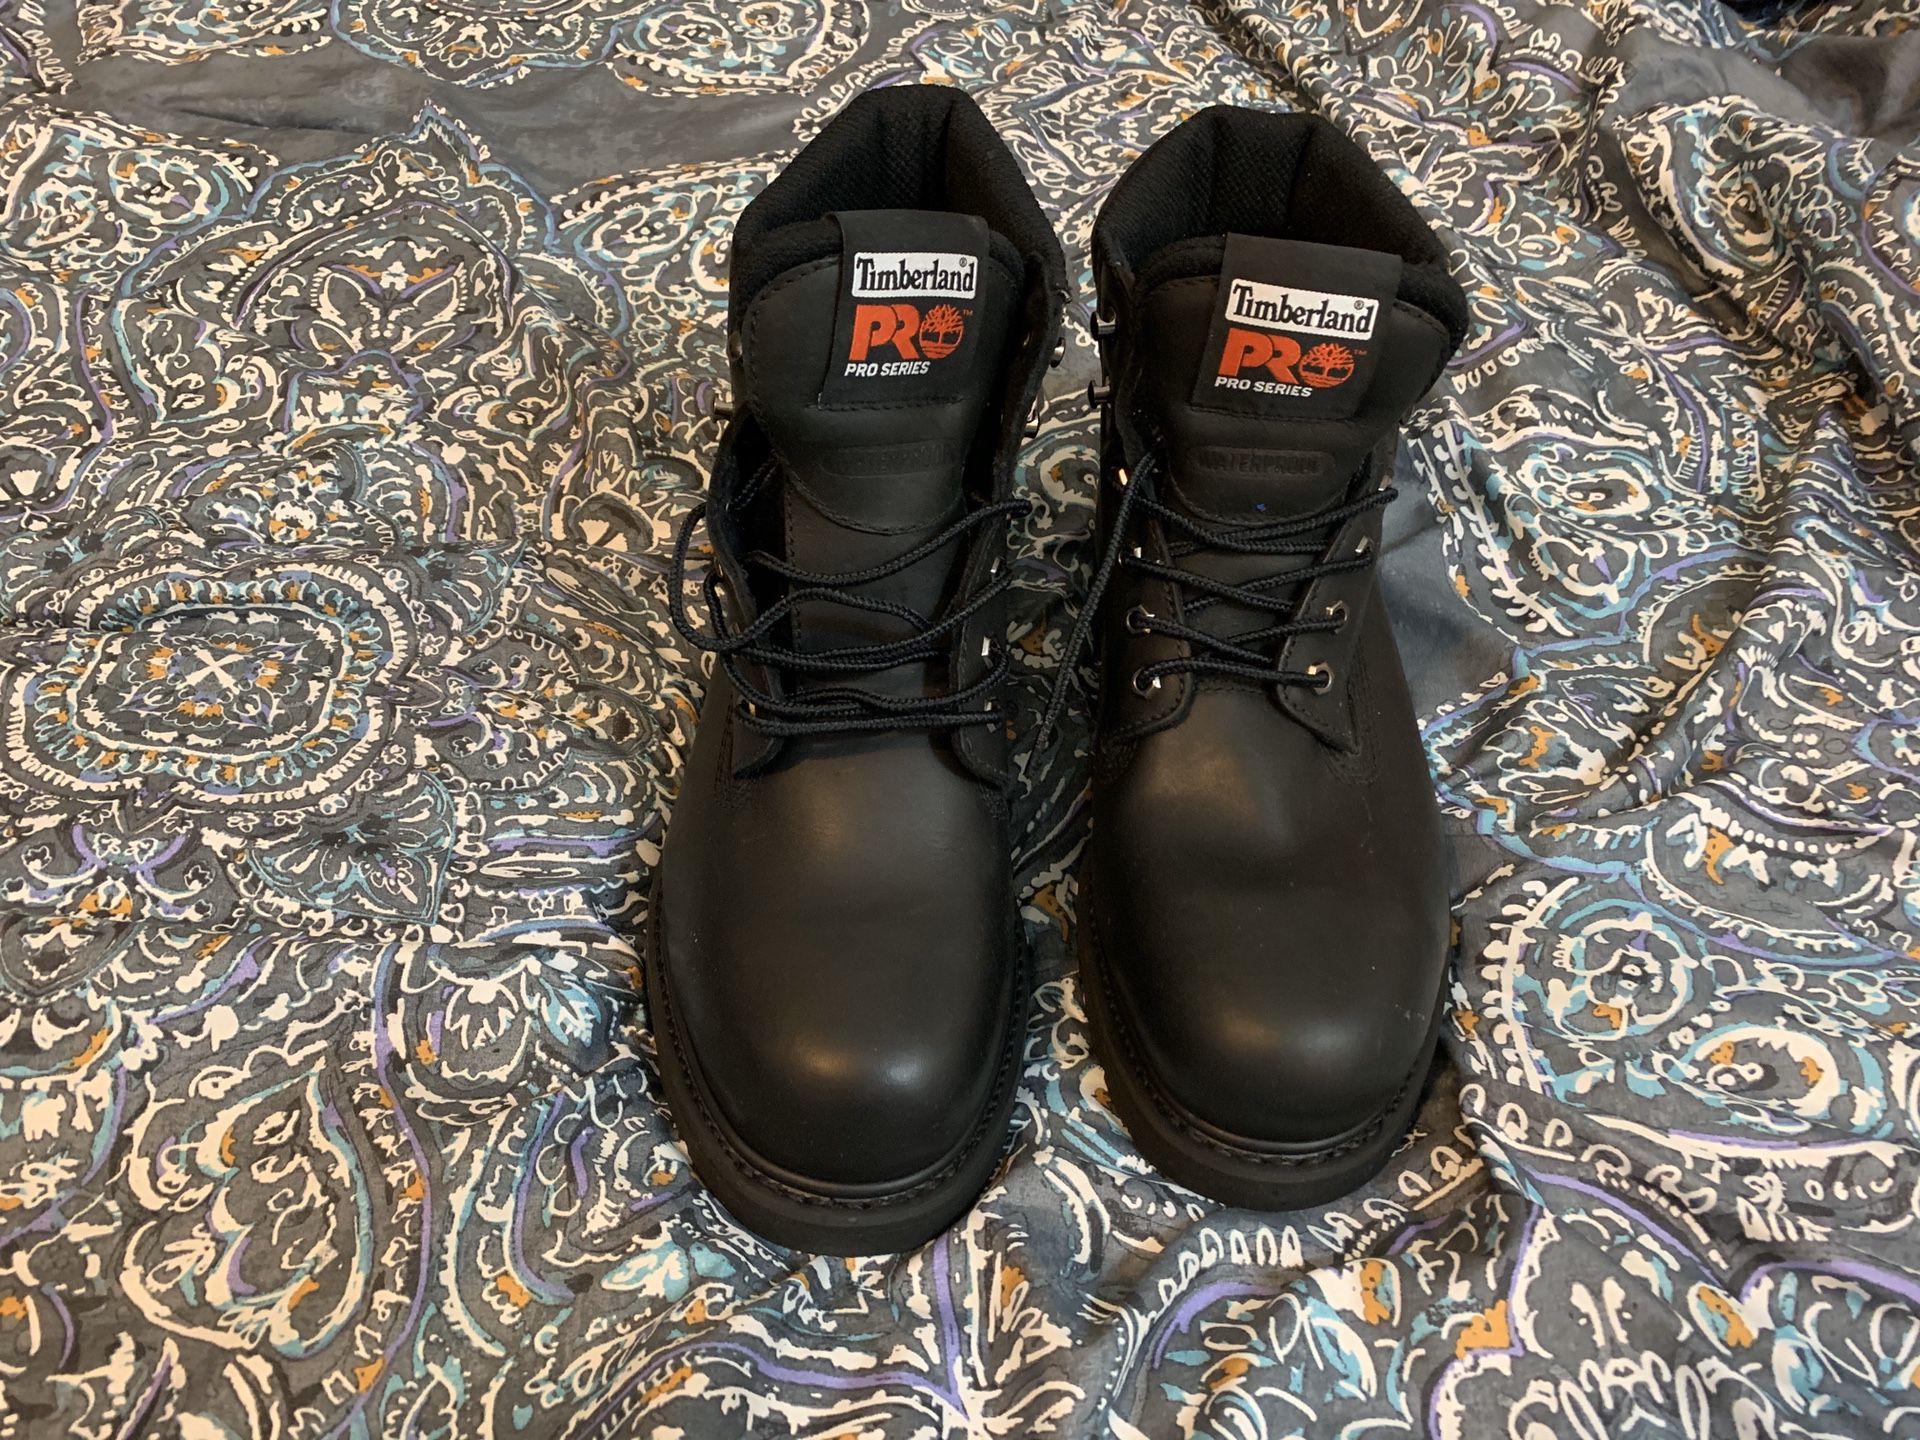 Men’s boots 🥾 toe work size 11m